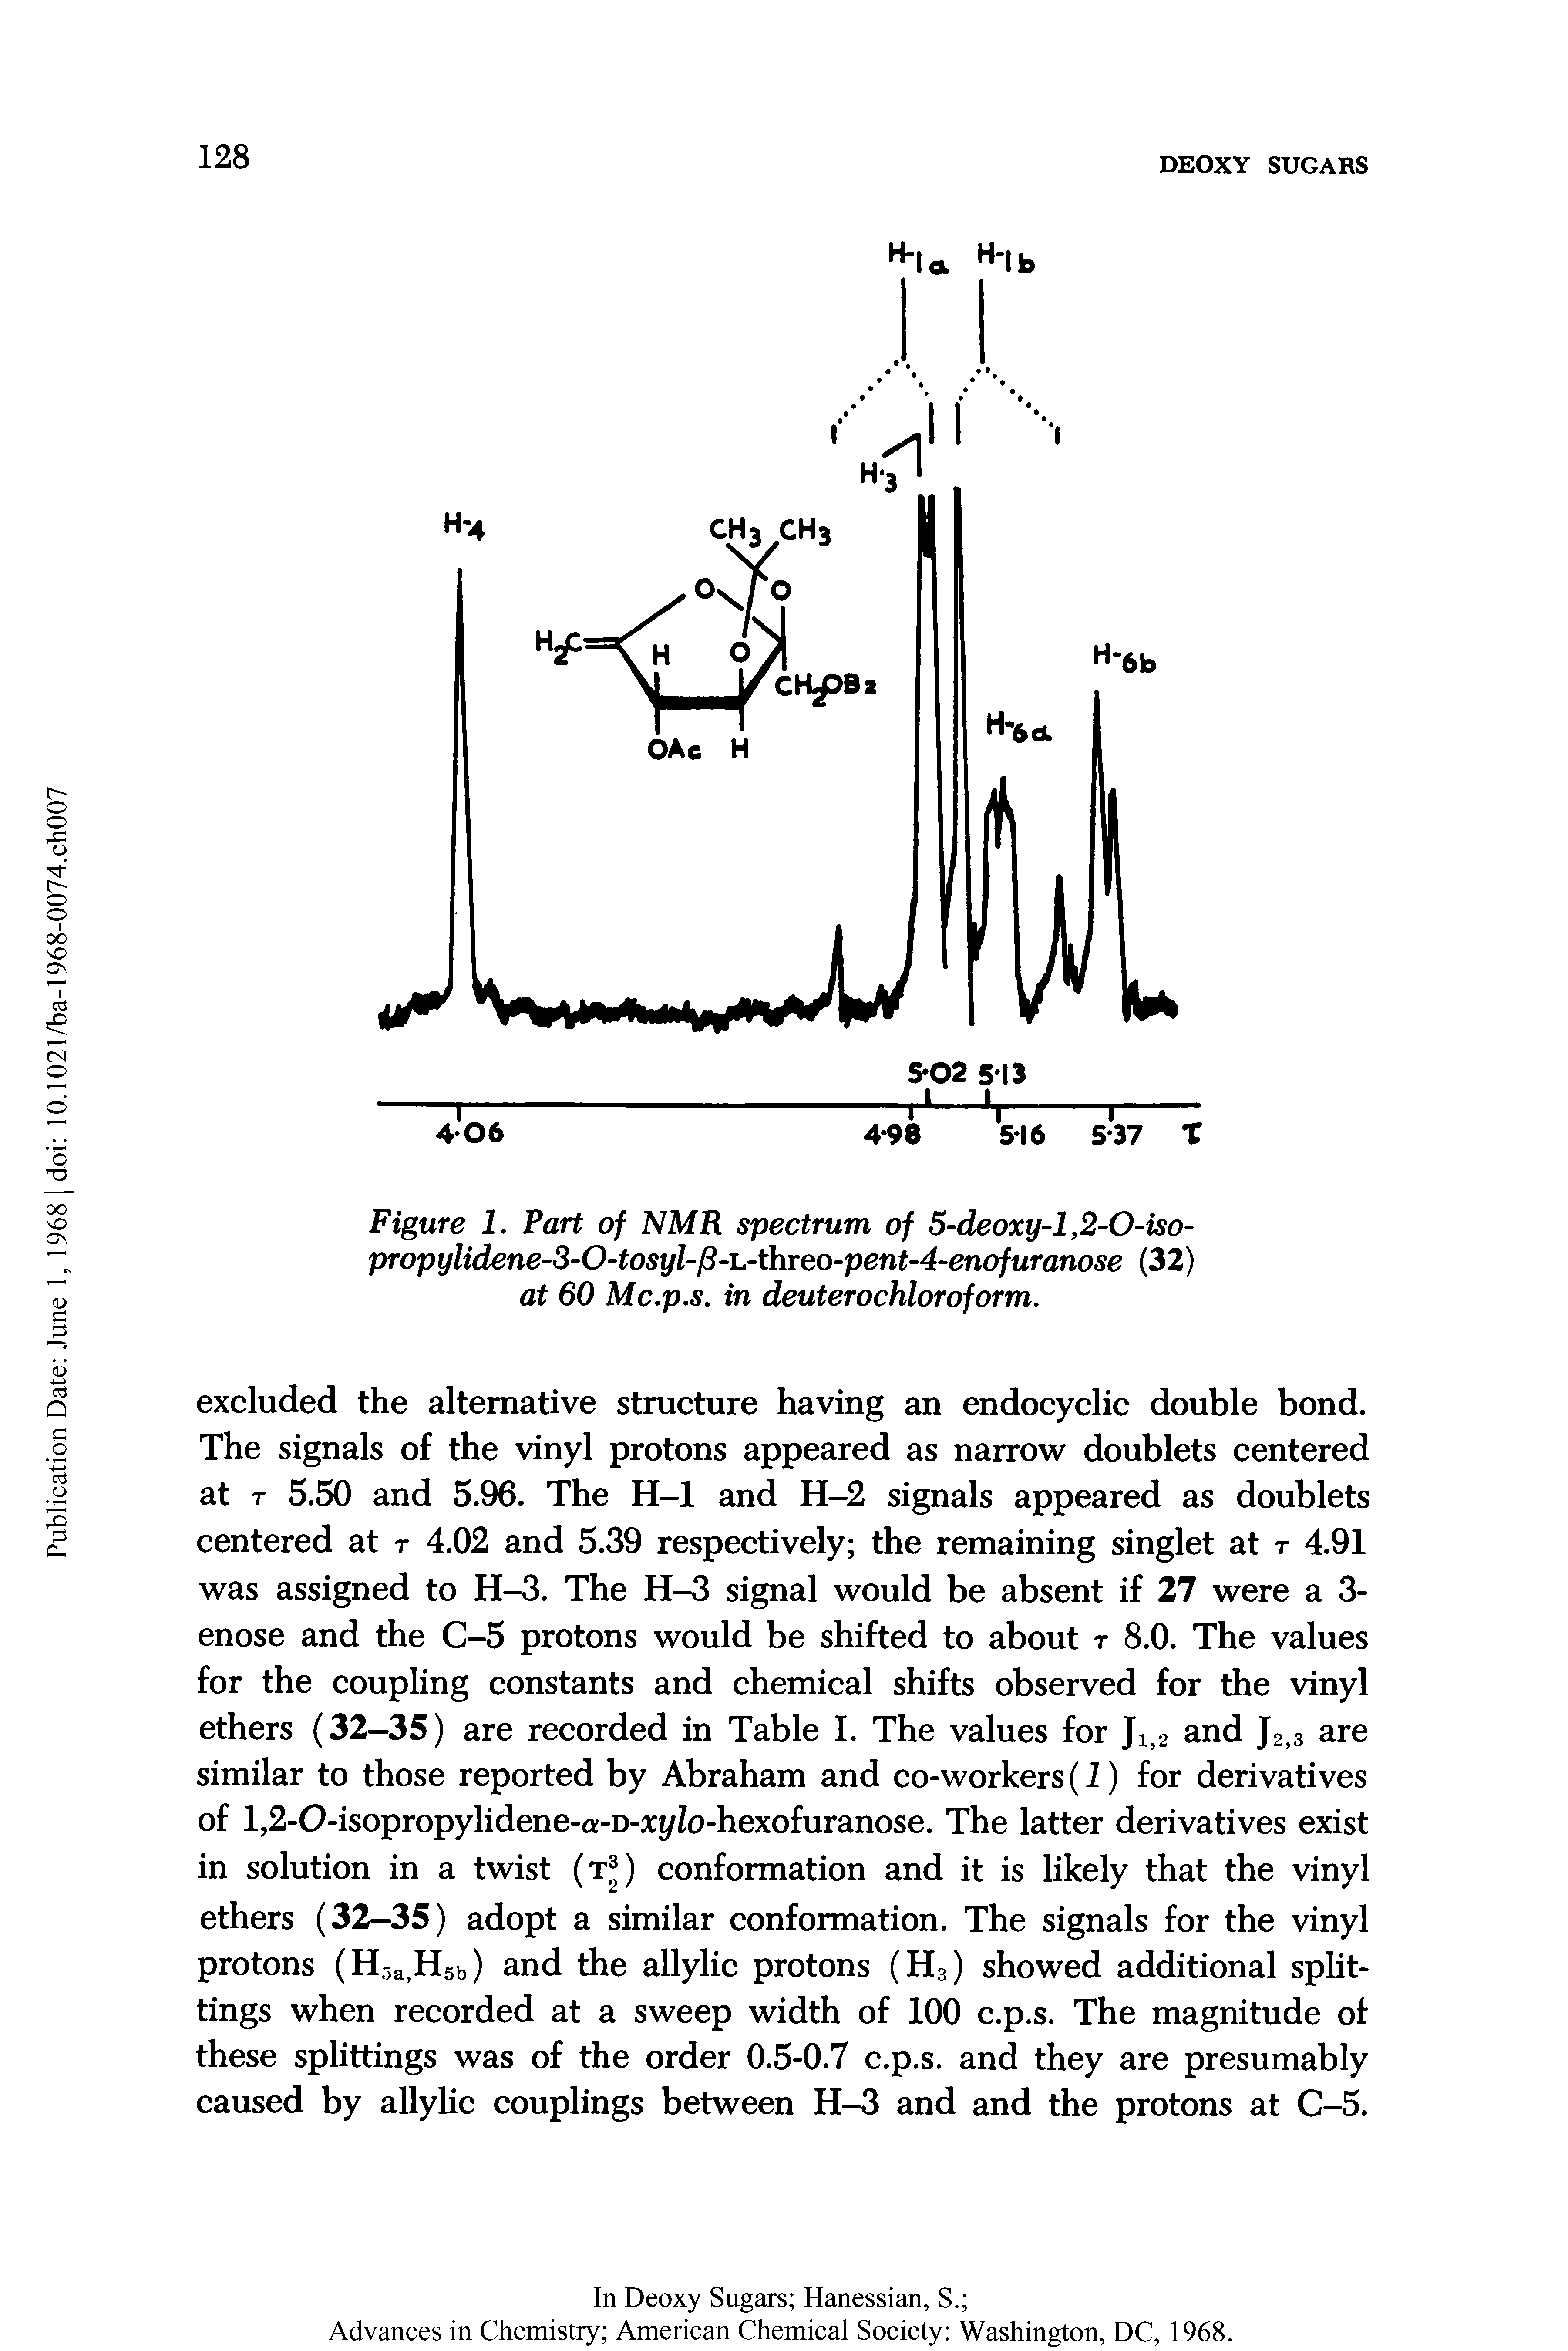 Figure 1. Part of NMR spectrum of 5-deoxy-l, 2-O-iso-propylidene-3-O-tosyl-p-L-threo-pent-4-enofuranose (32) at 60 Mc.p.s. in deuterochloroform.